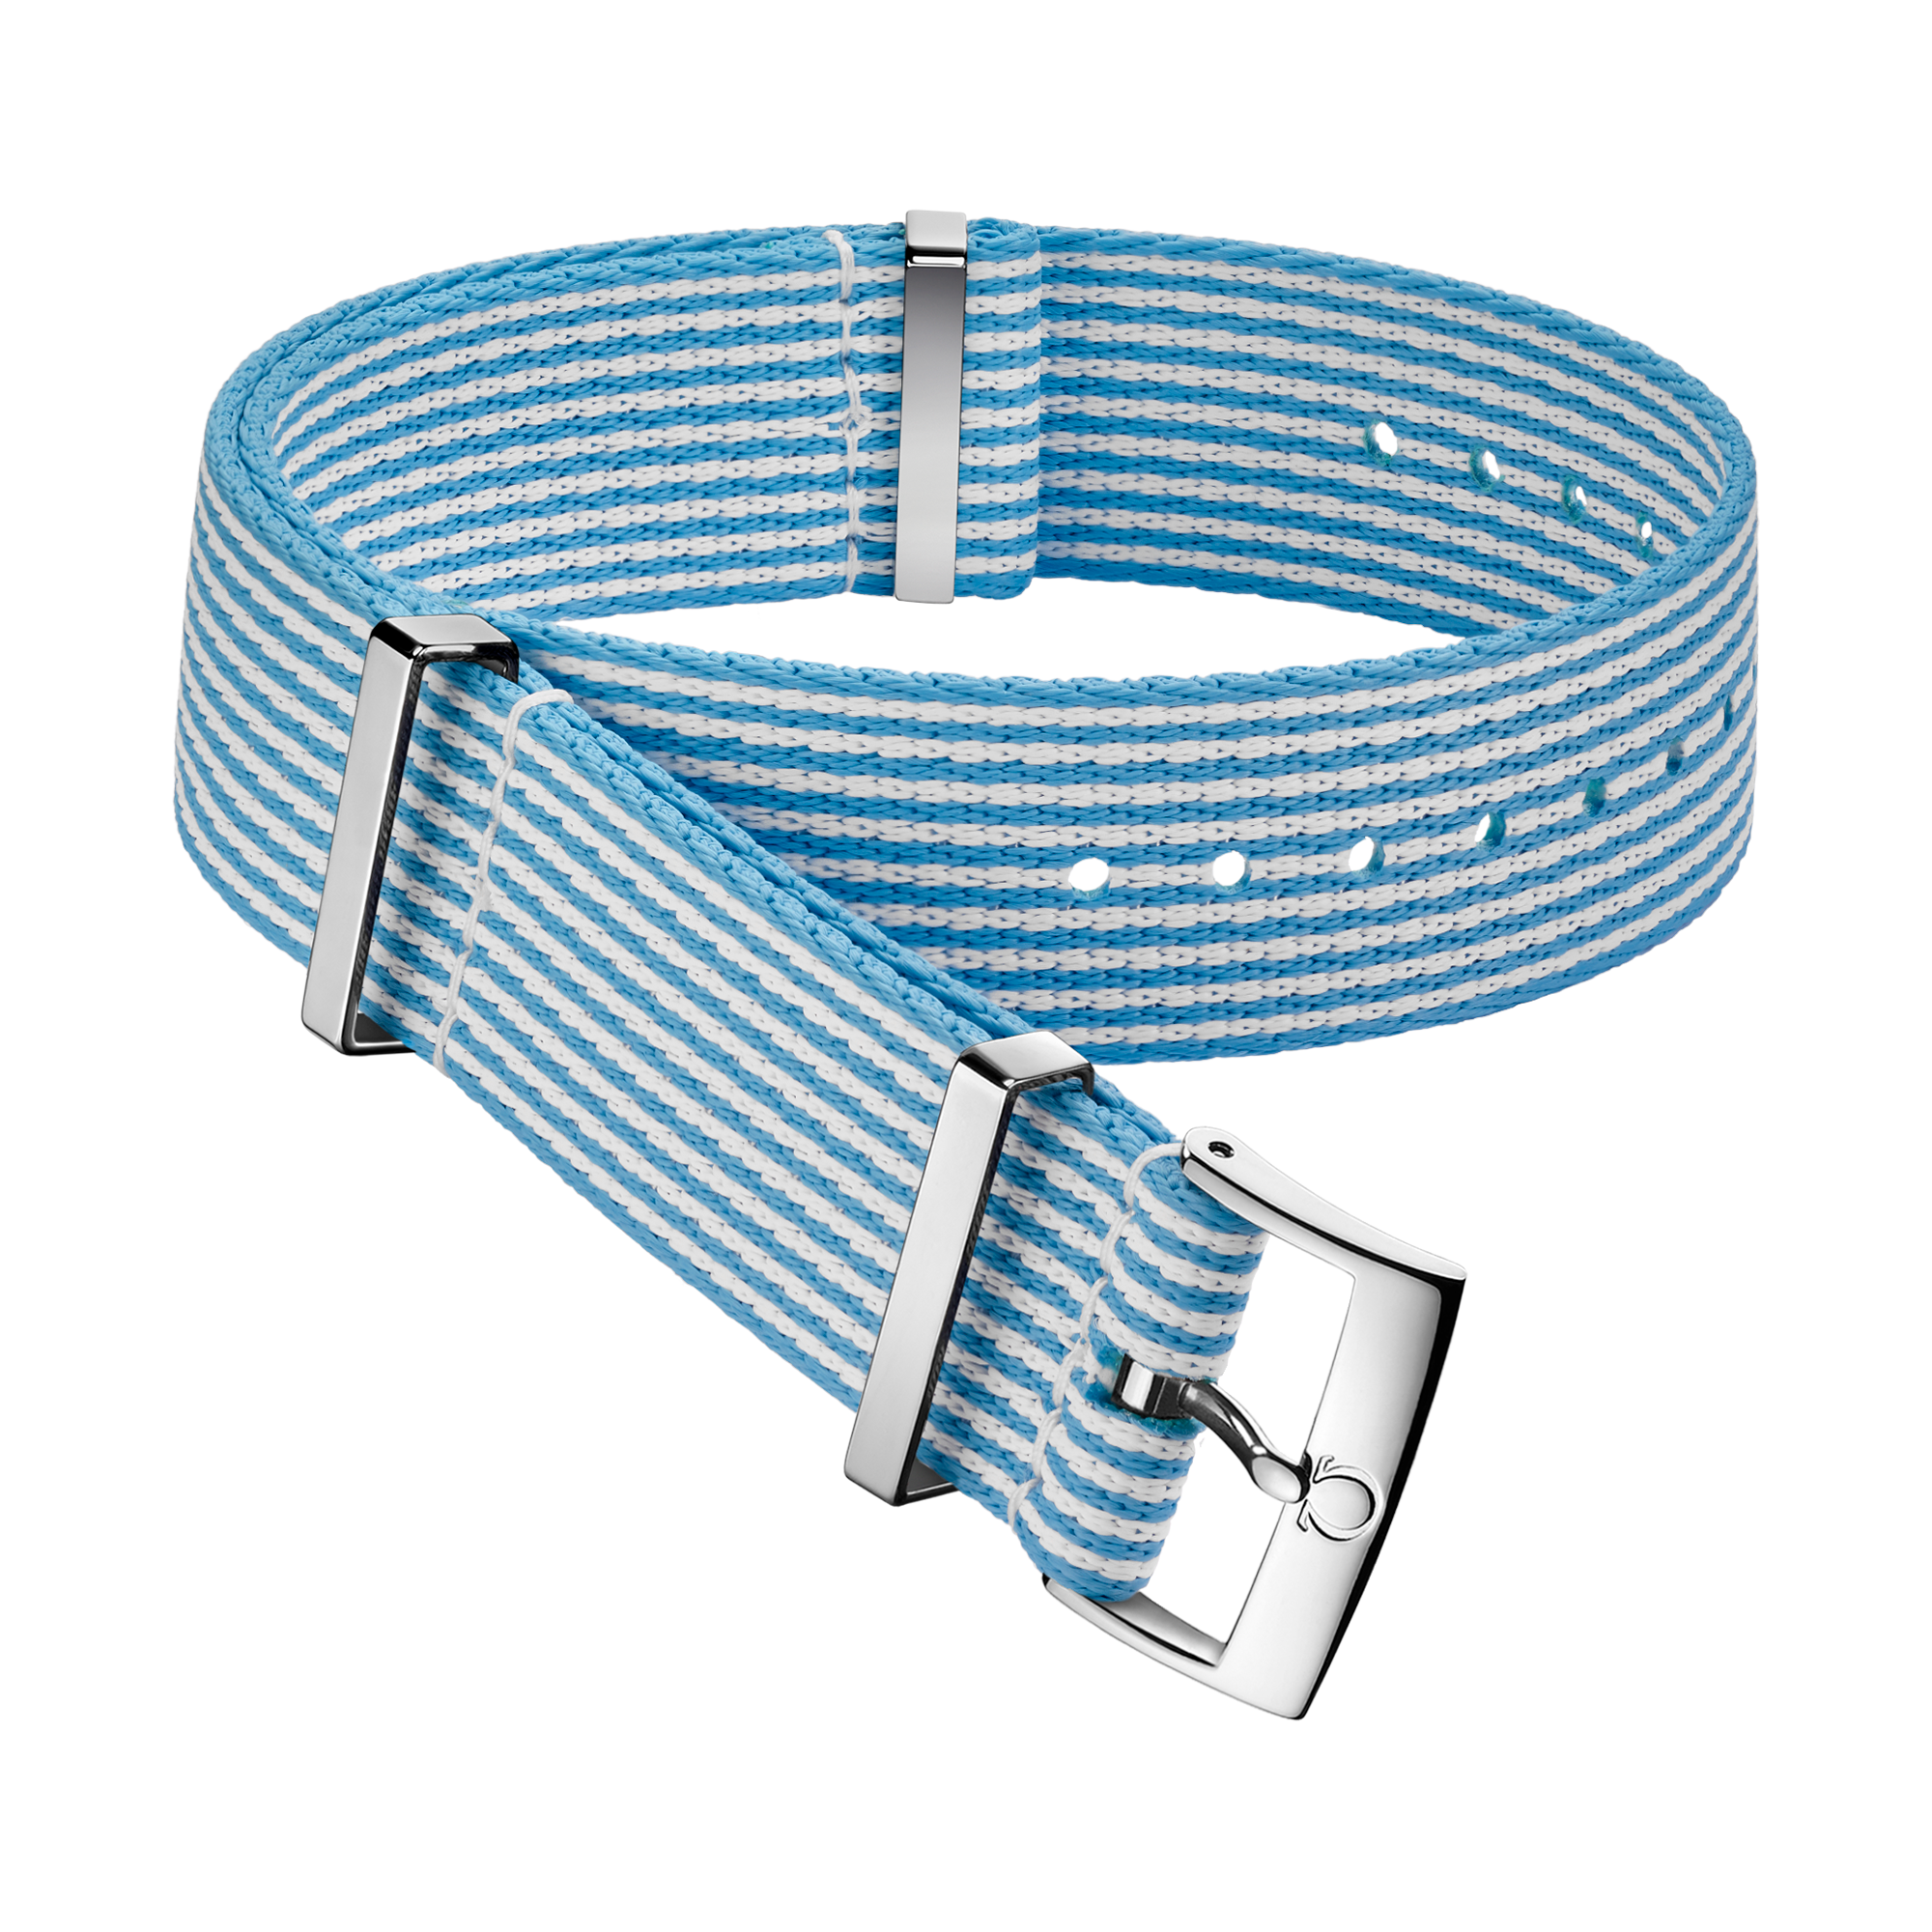 NATO strap - Polyamide striped blue and white strap - 031CWZ010682w